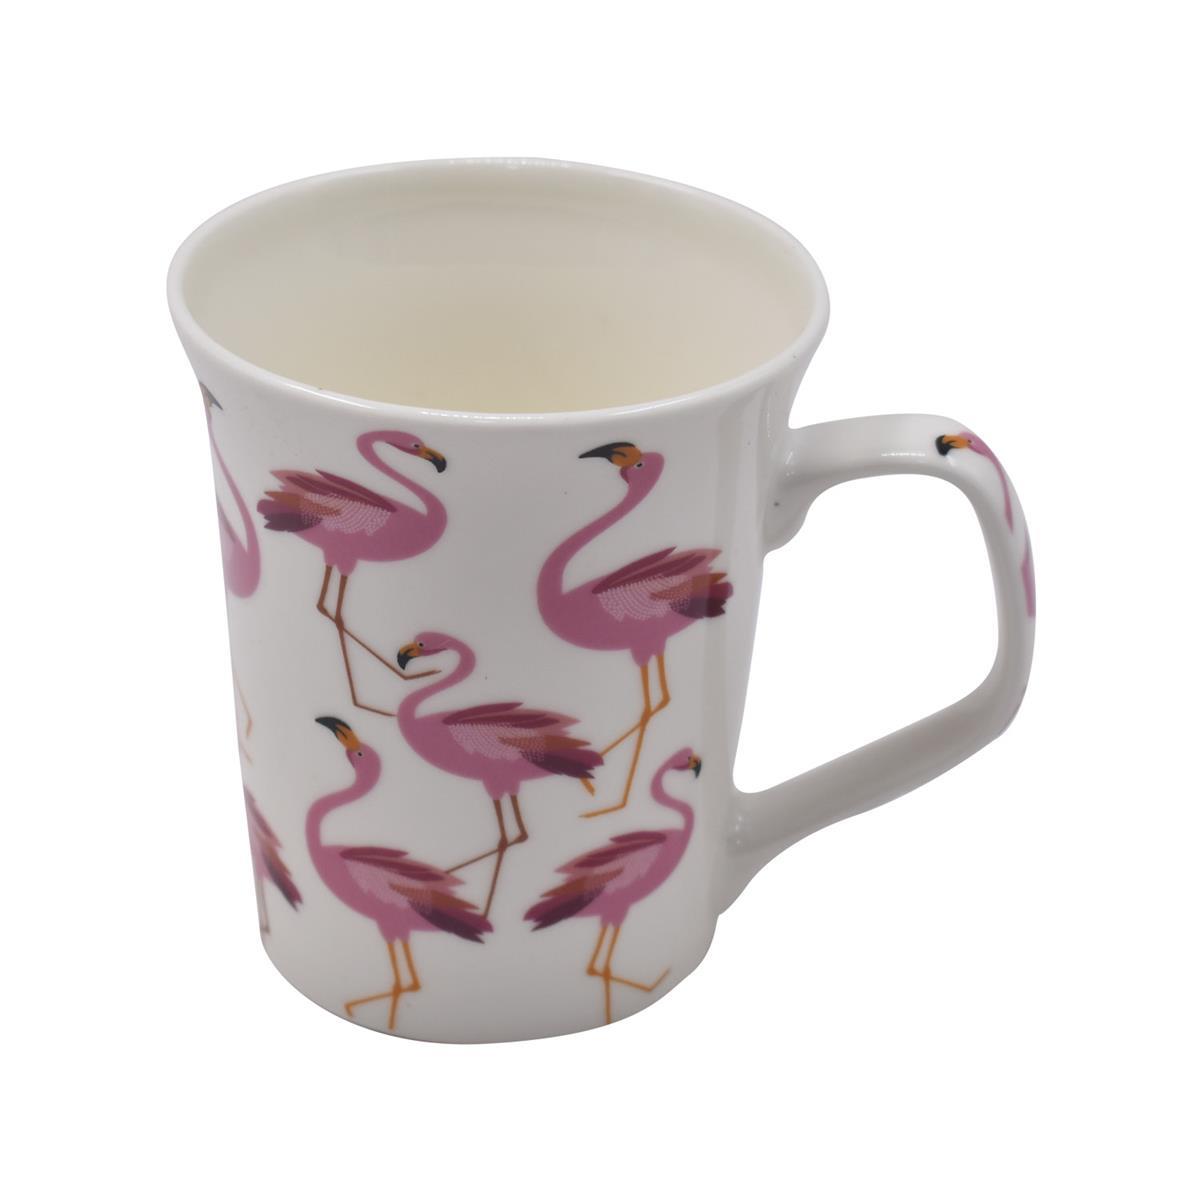 Printed Ceramic Tall Coffee or Tea Mug with handle - 325ml (BPM4611-C)